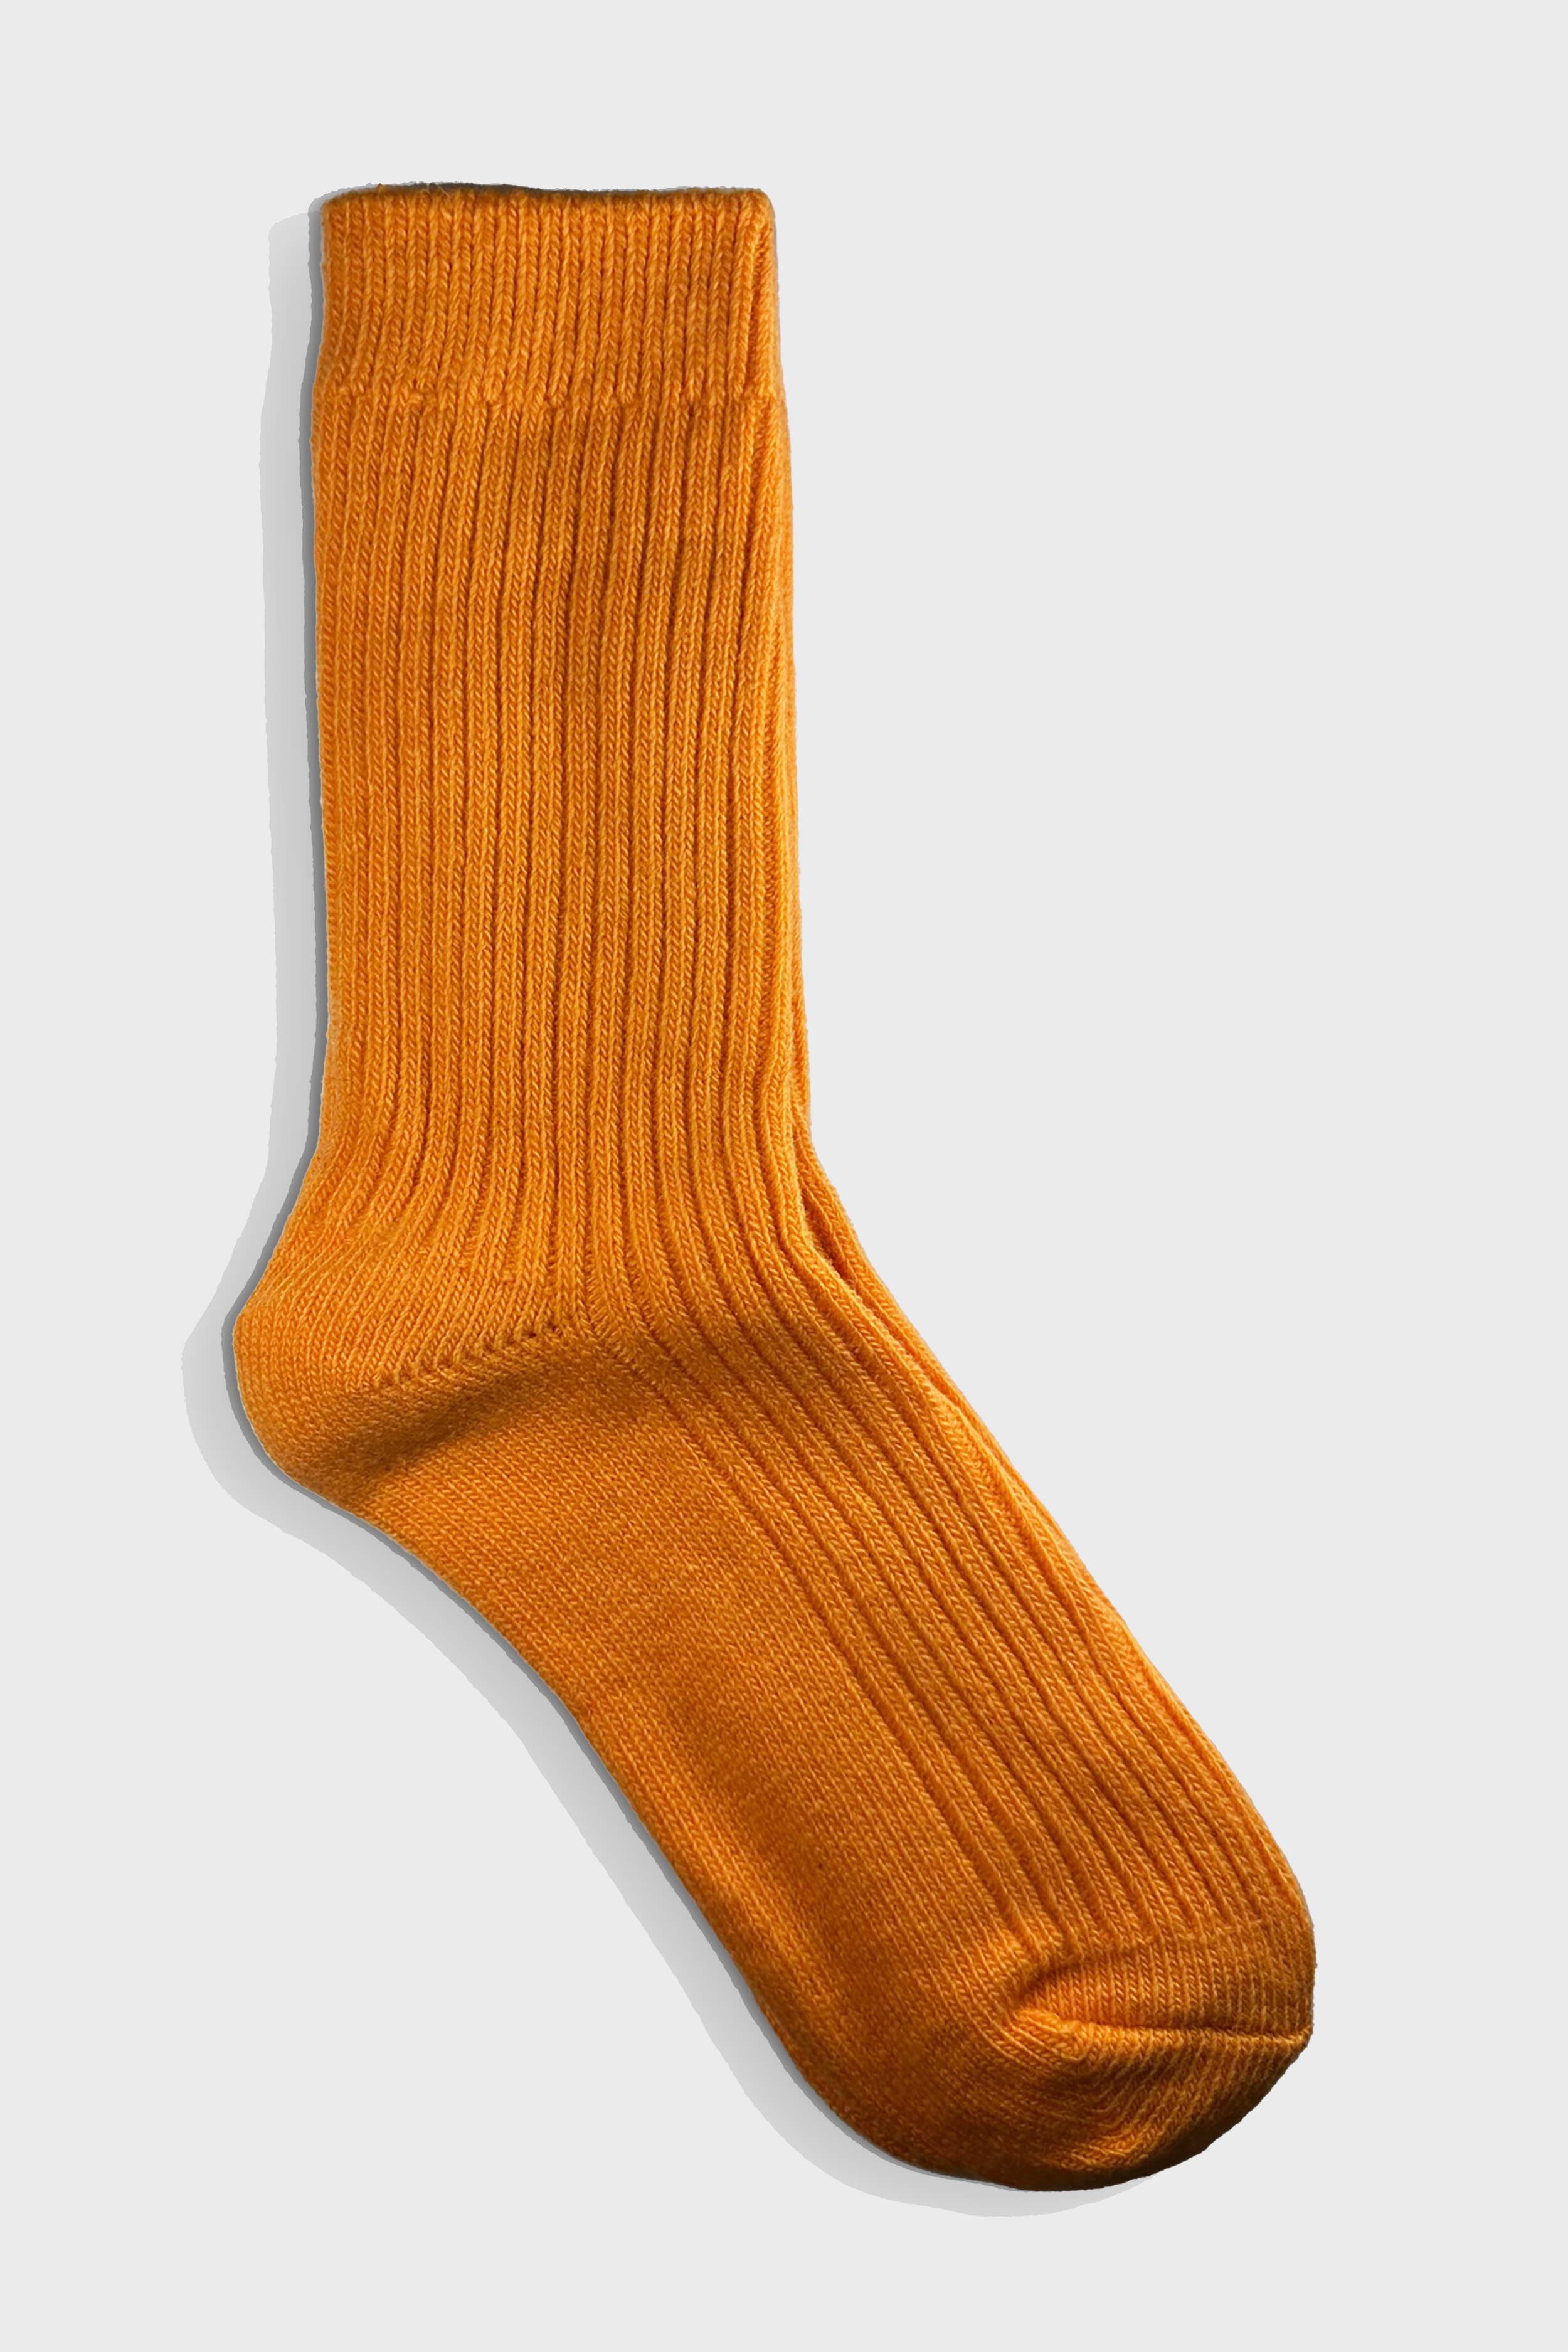 The Perfect Wool Sock